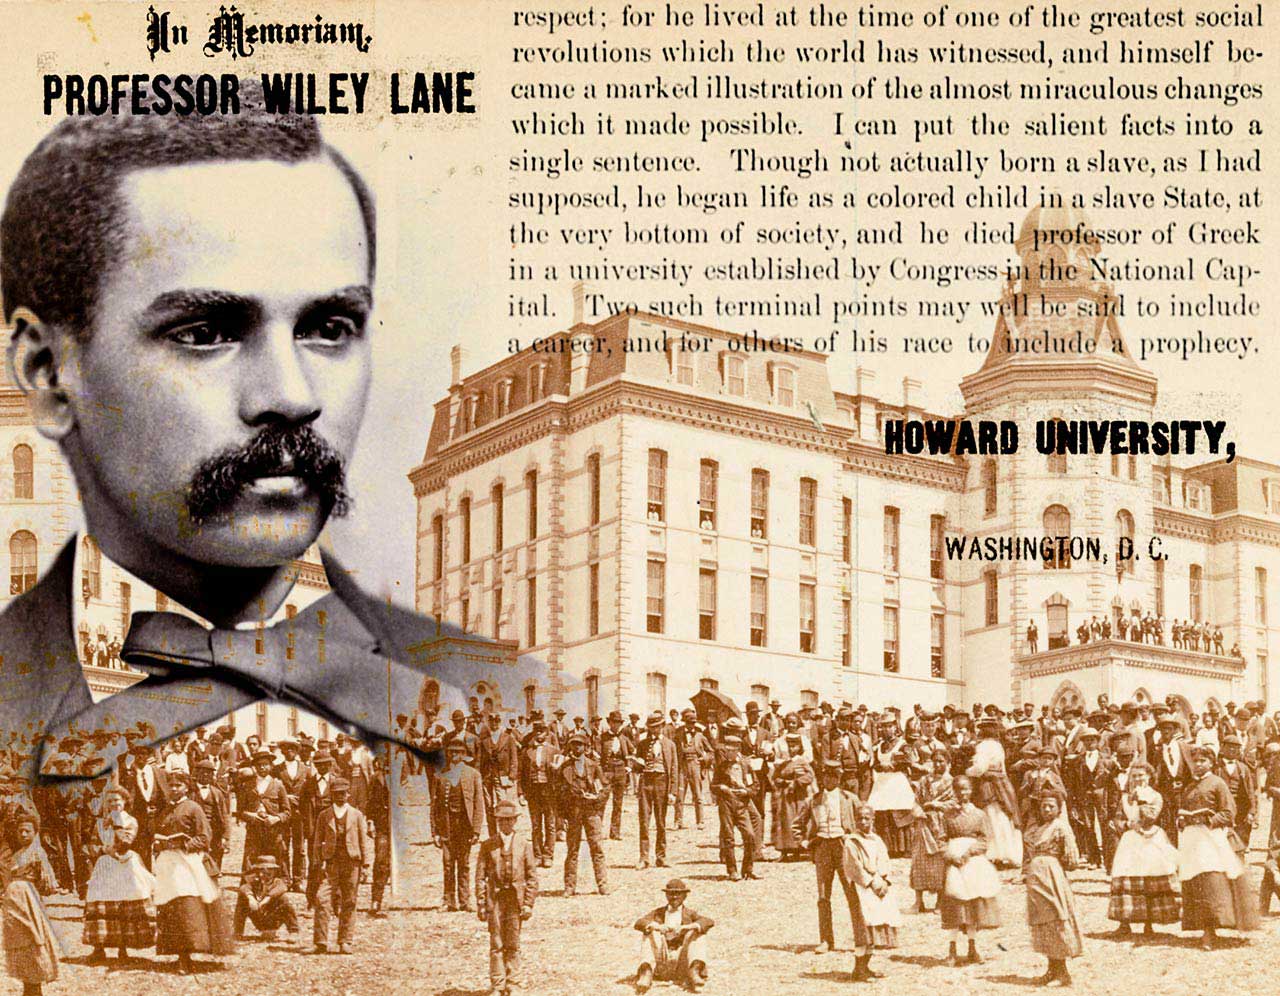 Wiley Lane